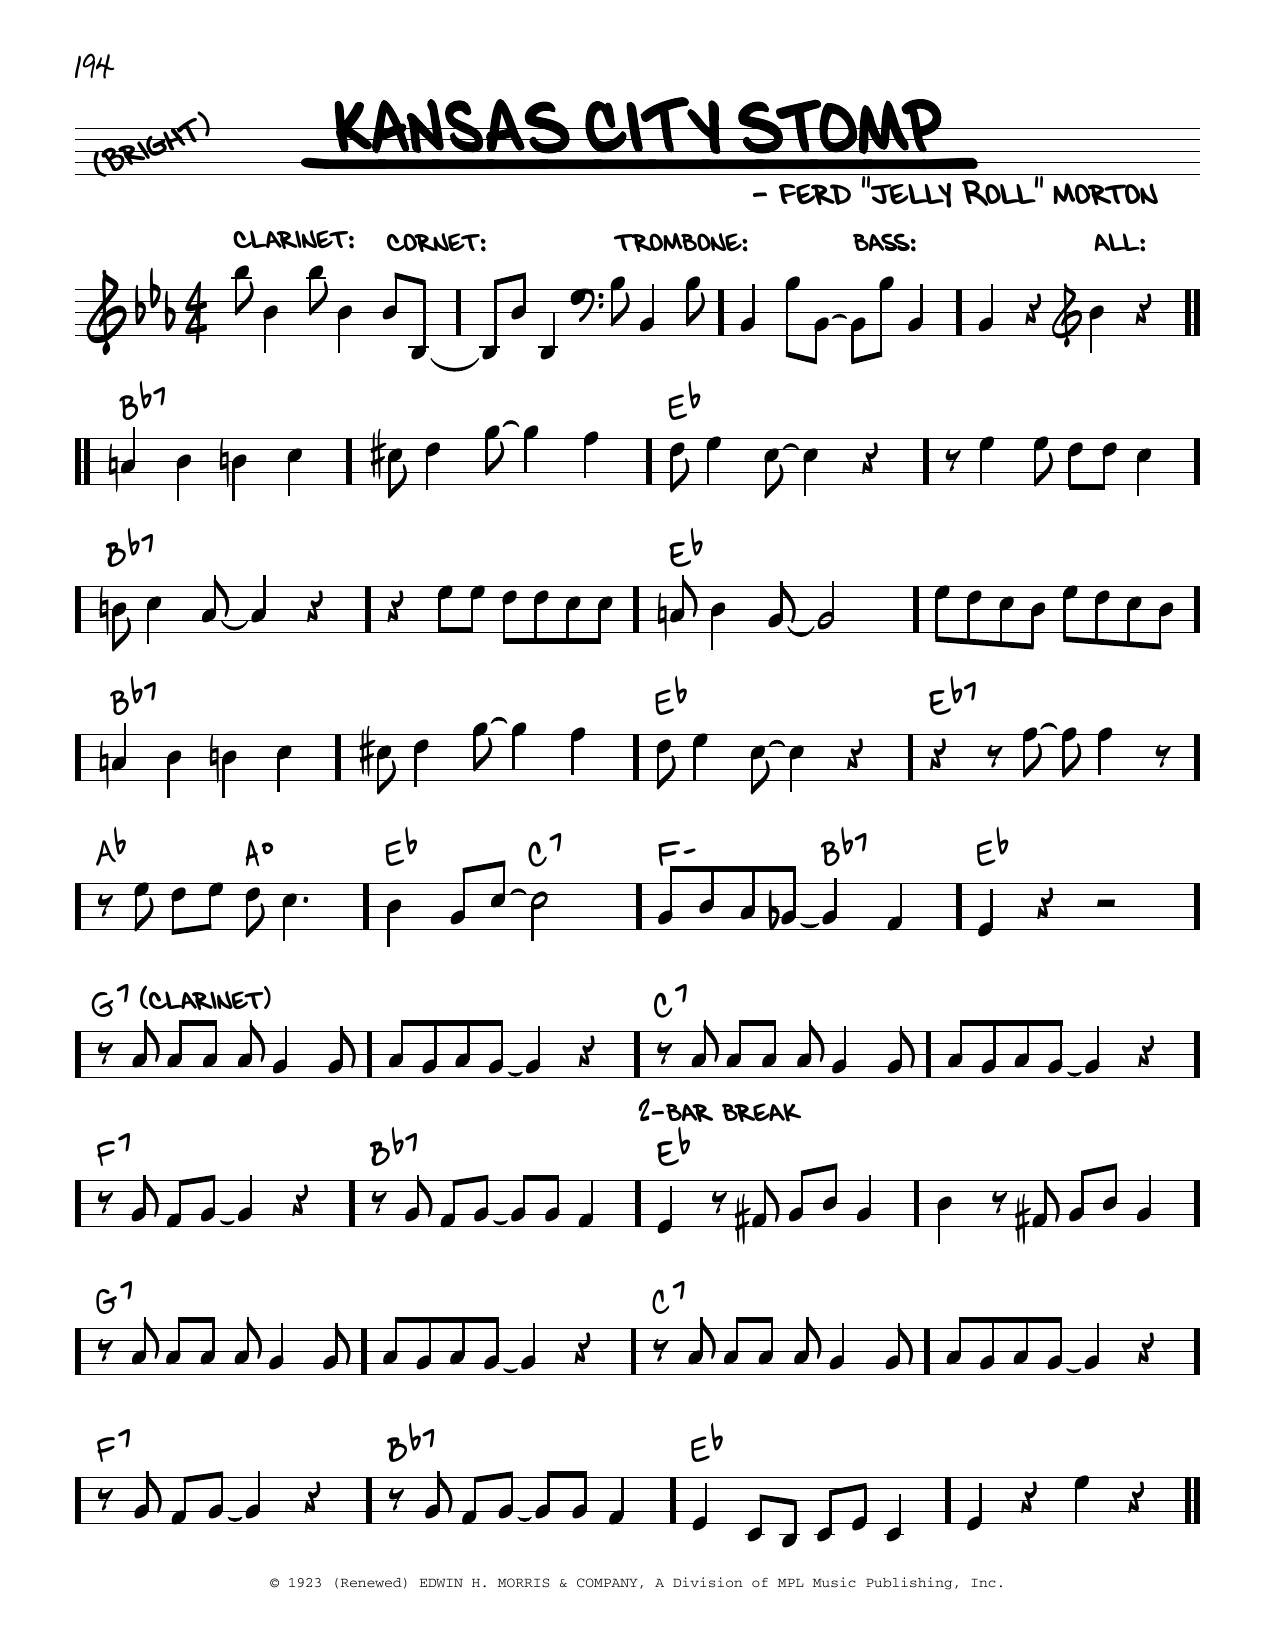 Jelly Roll Morton Kansas City Stomp (arr. Robert Rawlins) Sheet Music Notes & Chords for Real Book – Melody, Lyrics & Chords - Download or Print PDF